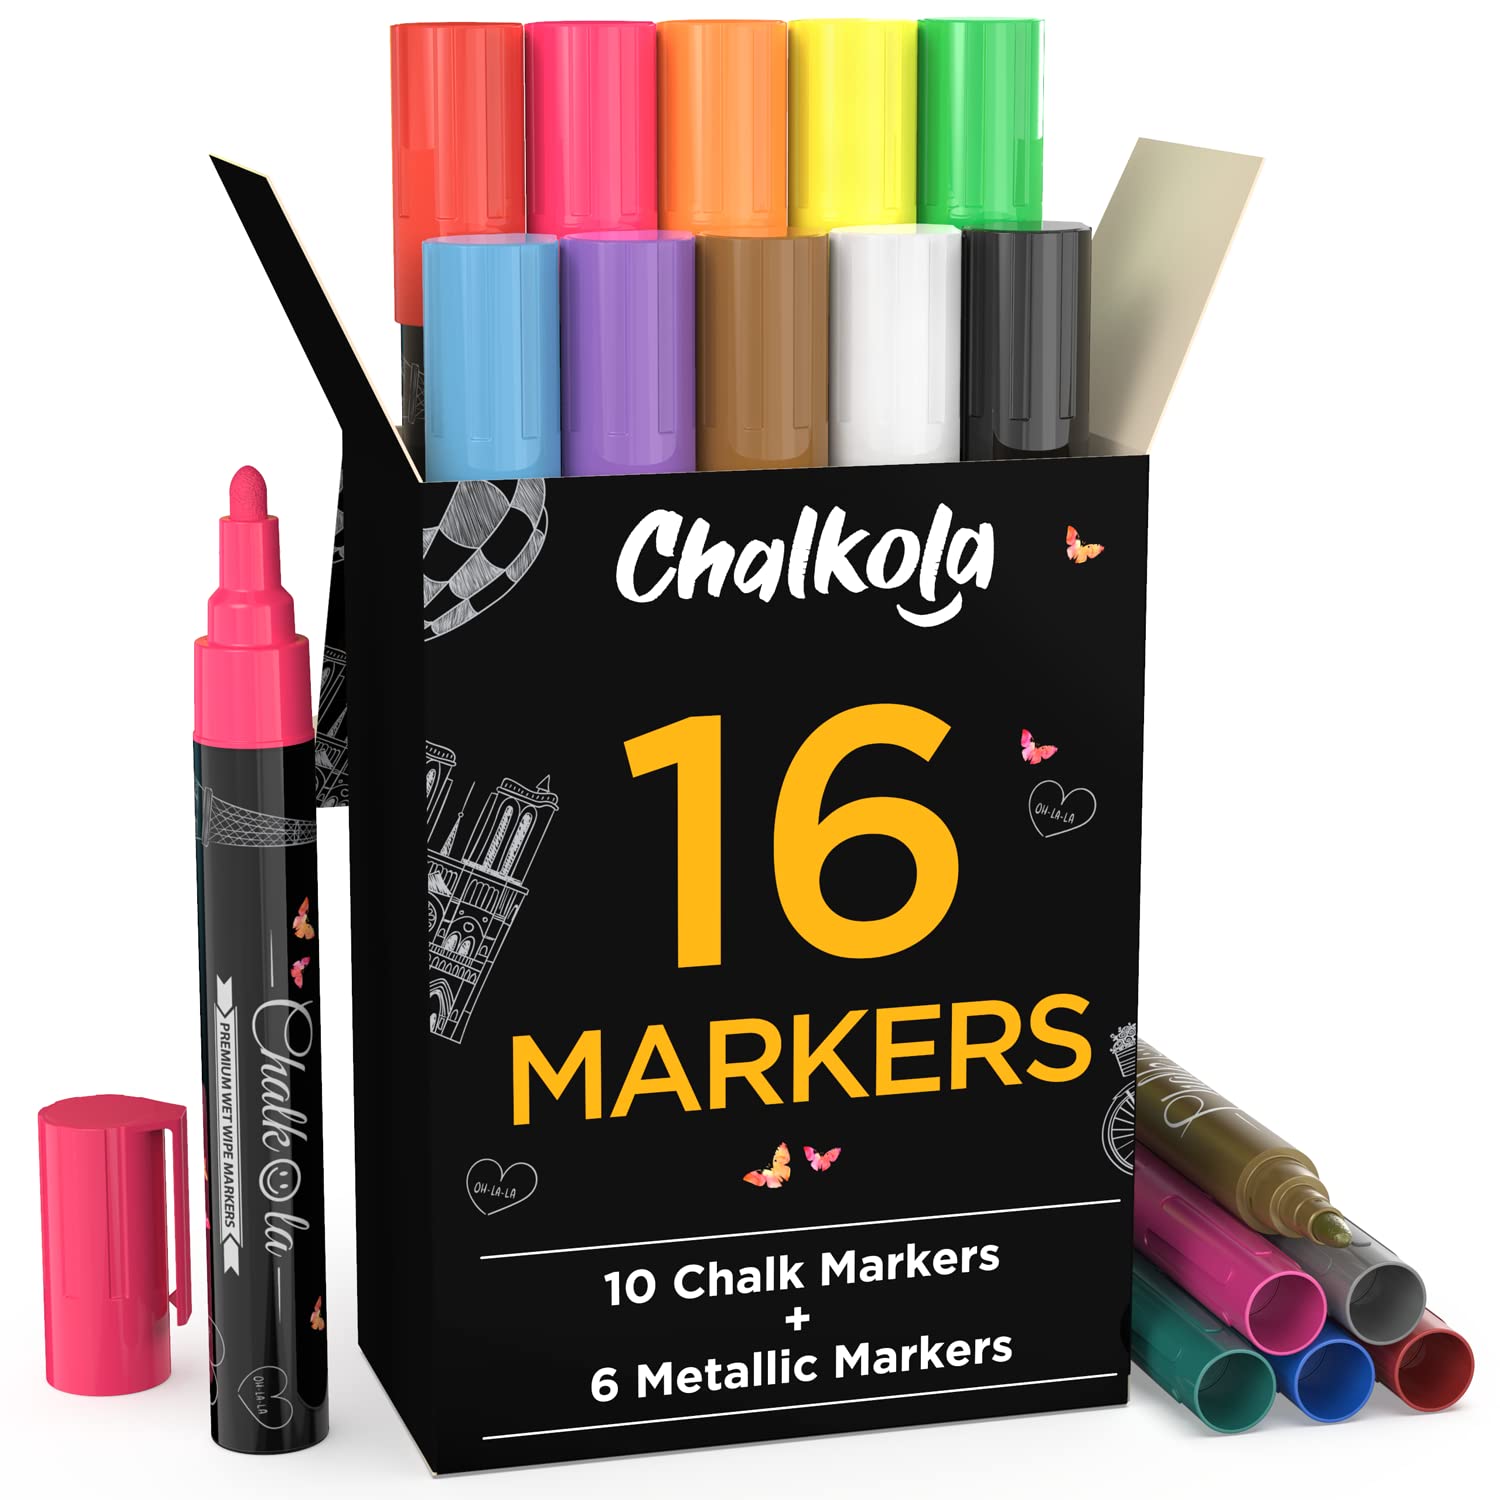 Chalkola Liquid Chalk Markers & Metallic Colors Pack of 16 Chalk